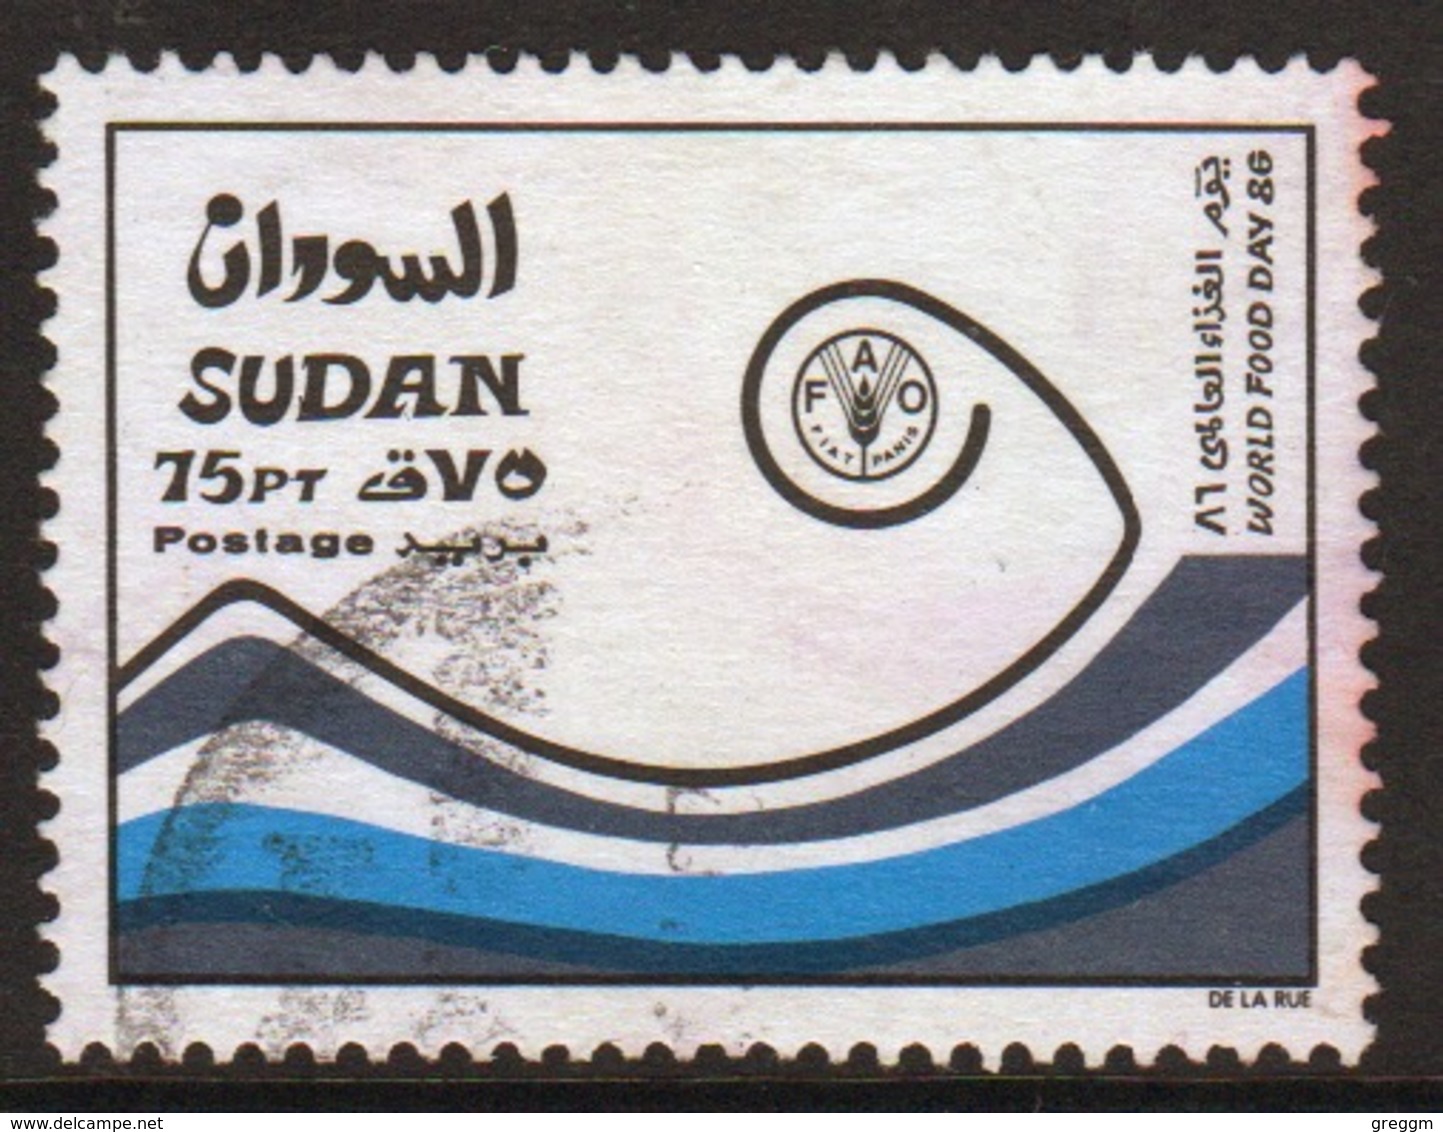 Sudan 1983 Single Stamp To Celebrate World Food Day. - Sudan (1954-...)